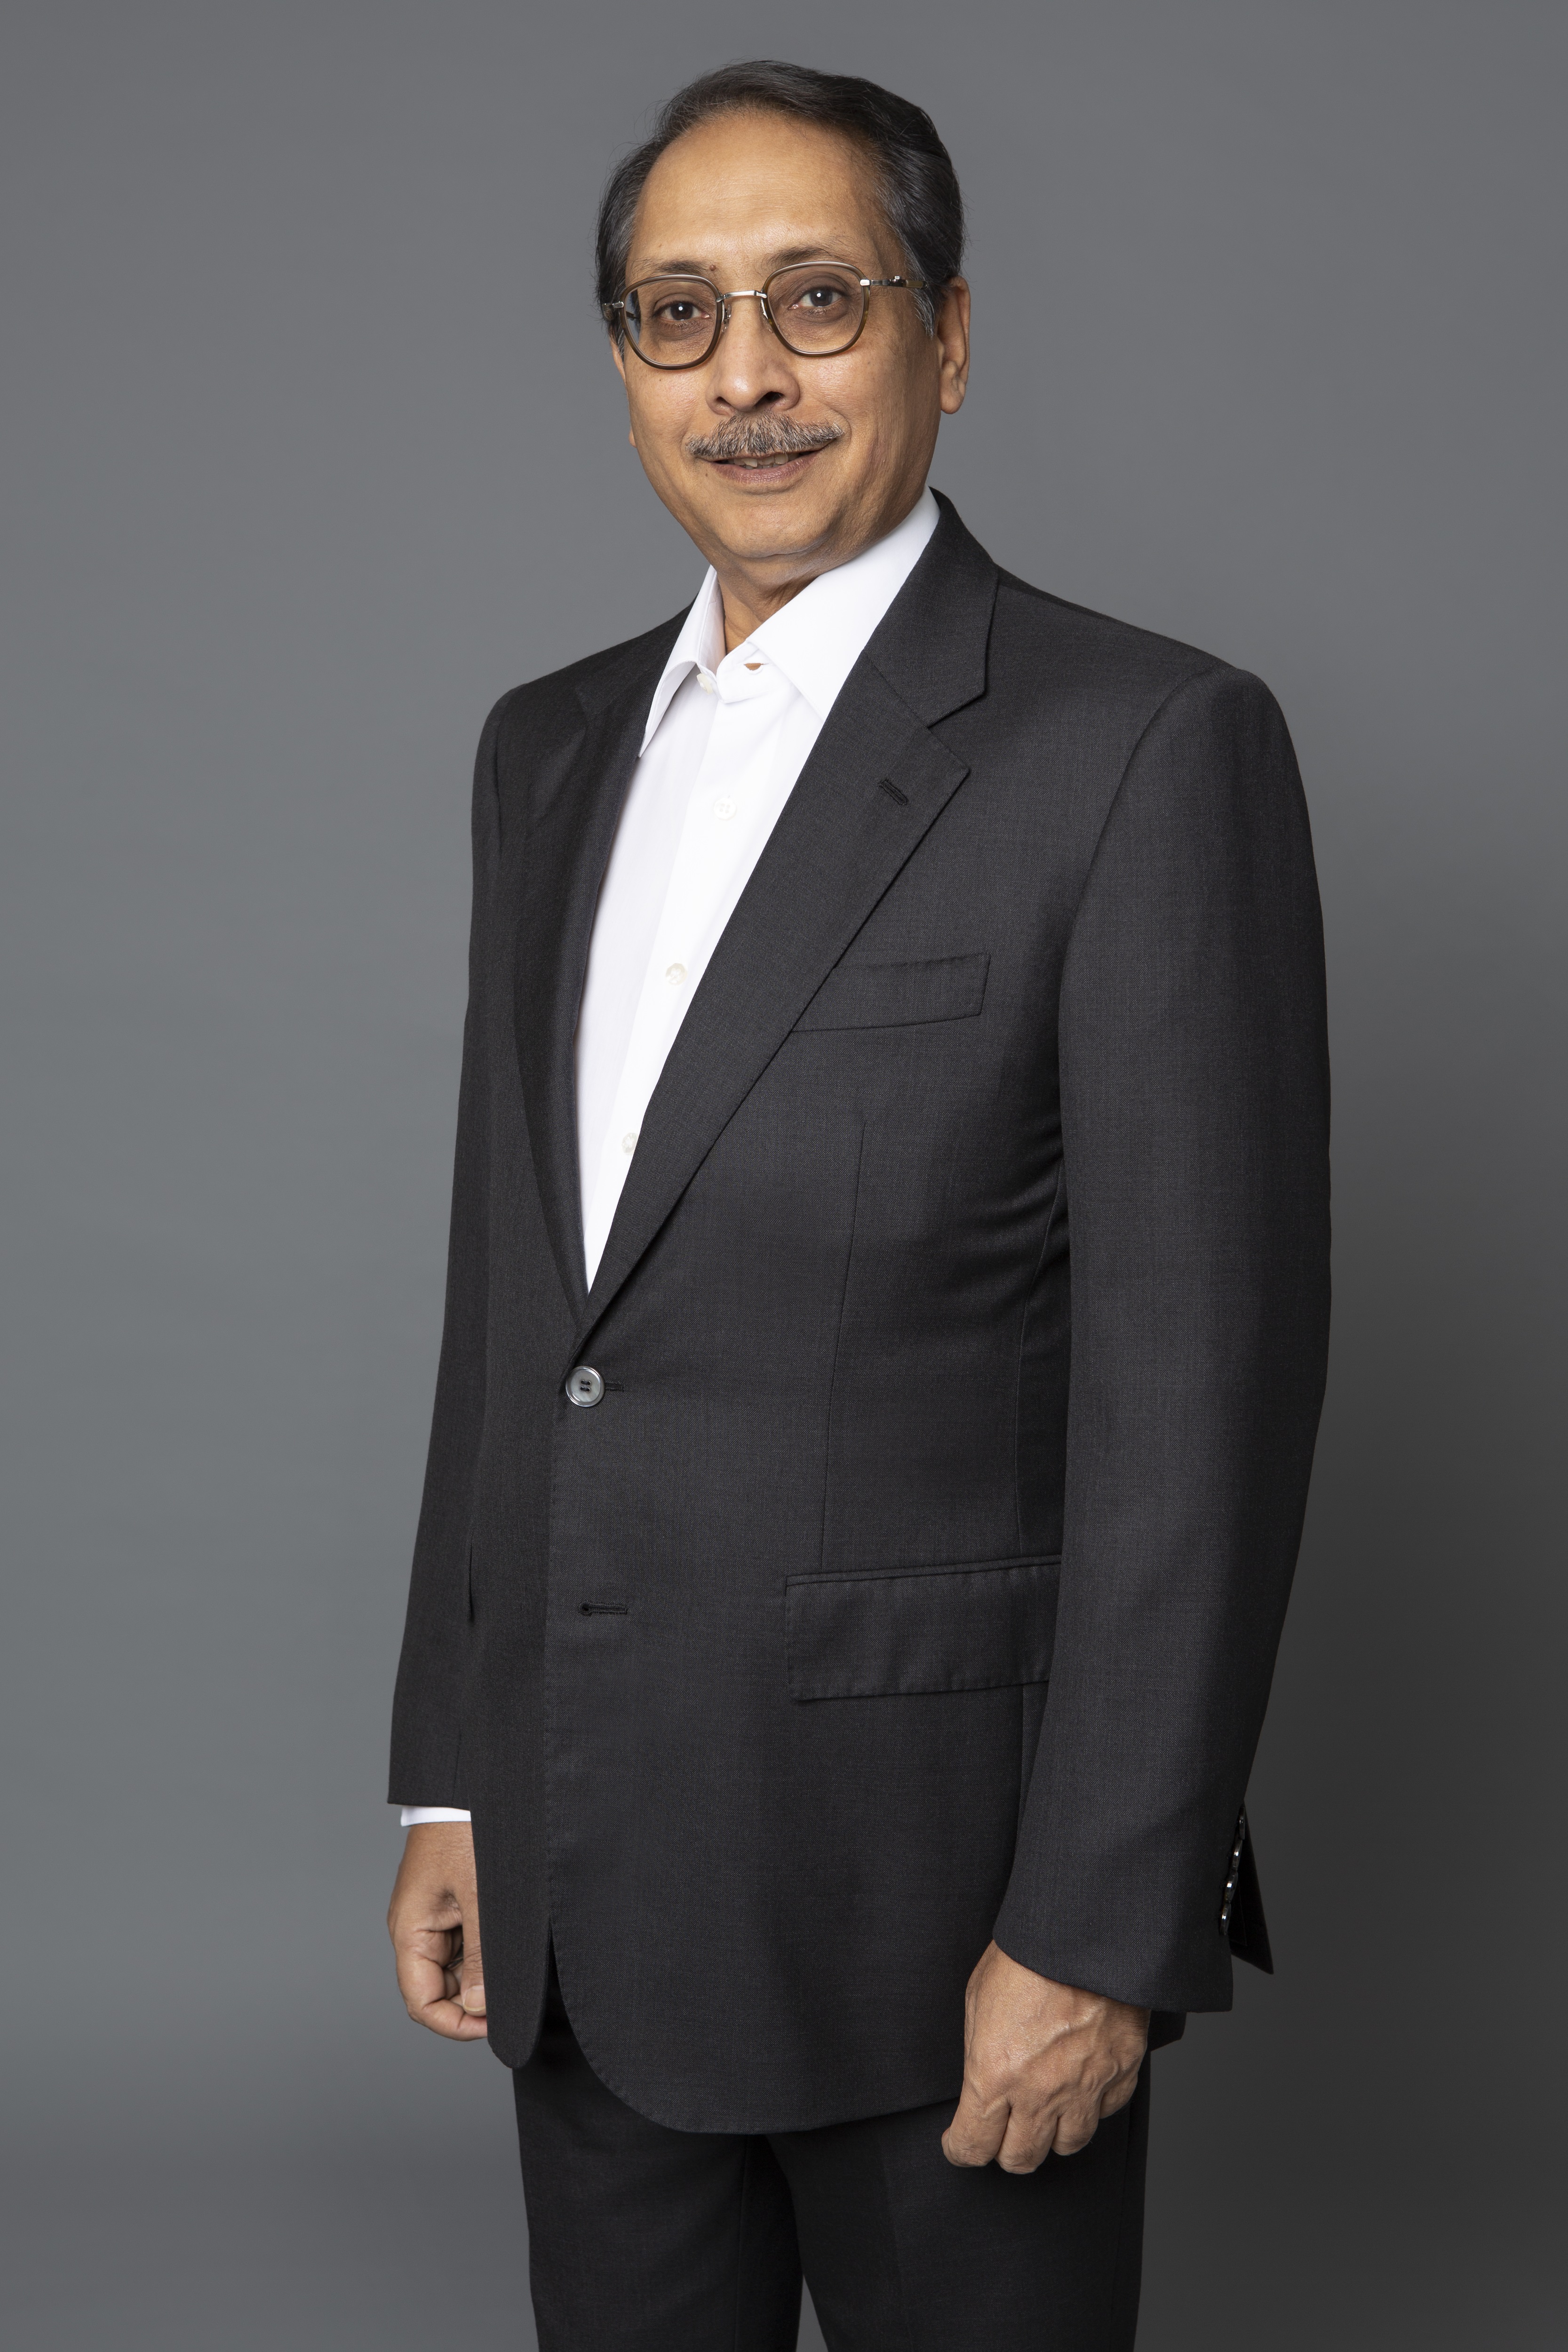 Mr. Aloke Lohia, Group CEO of Indorama Ventures. © Indorama Ventures.